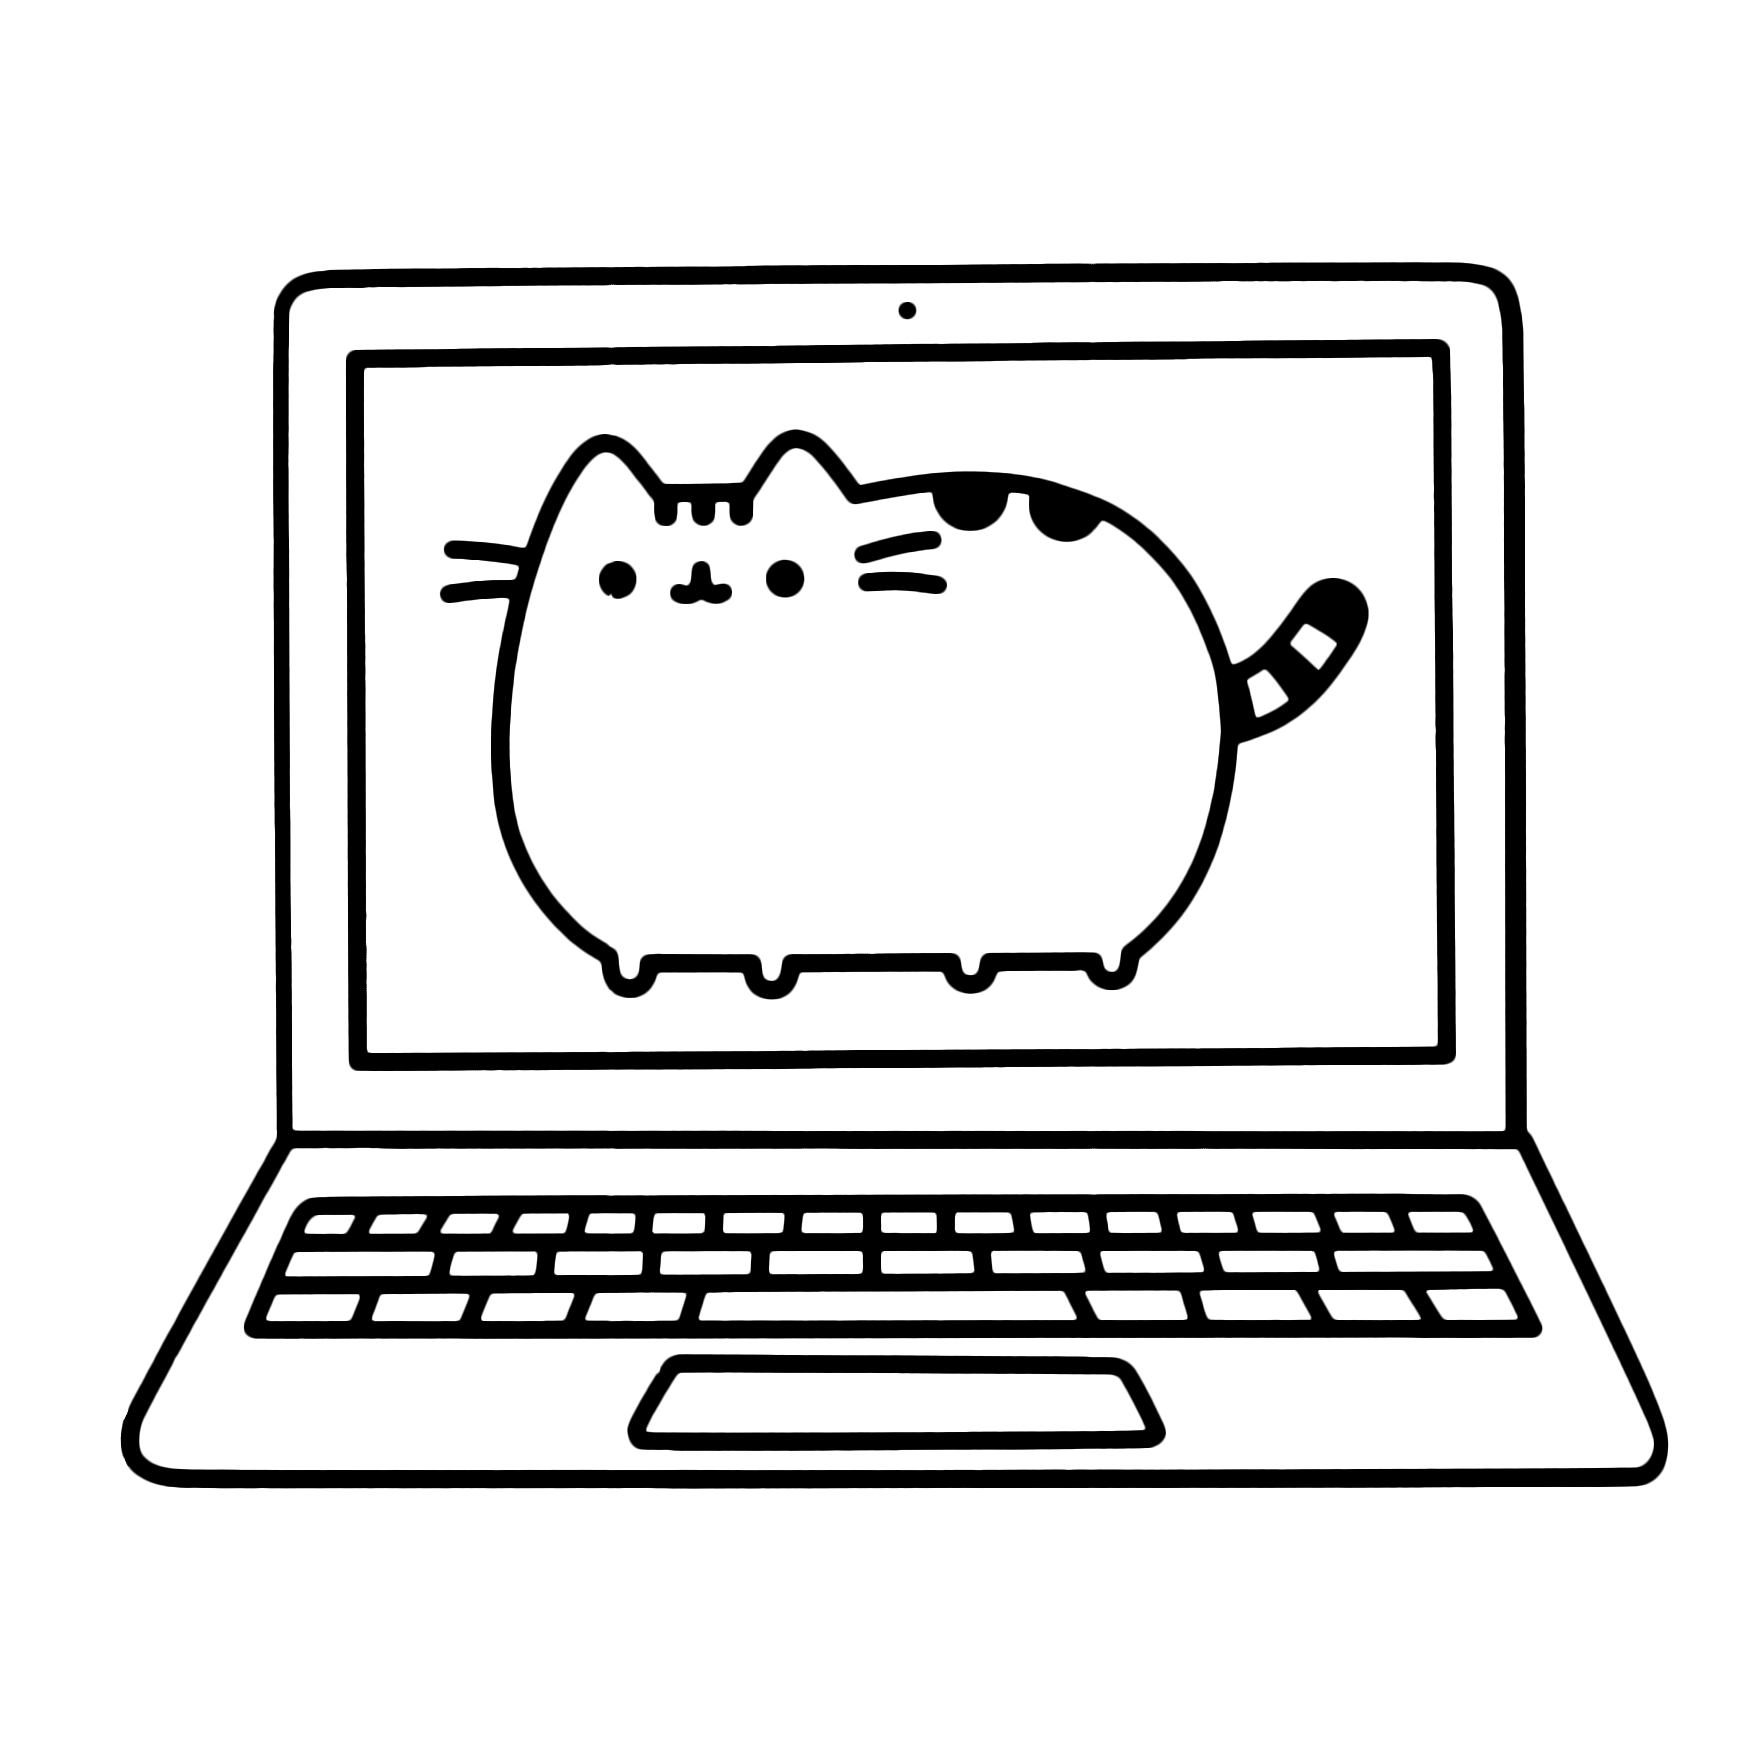 Pusheen Cat - Pusheen Cat nel monitor del computer